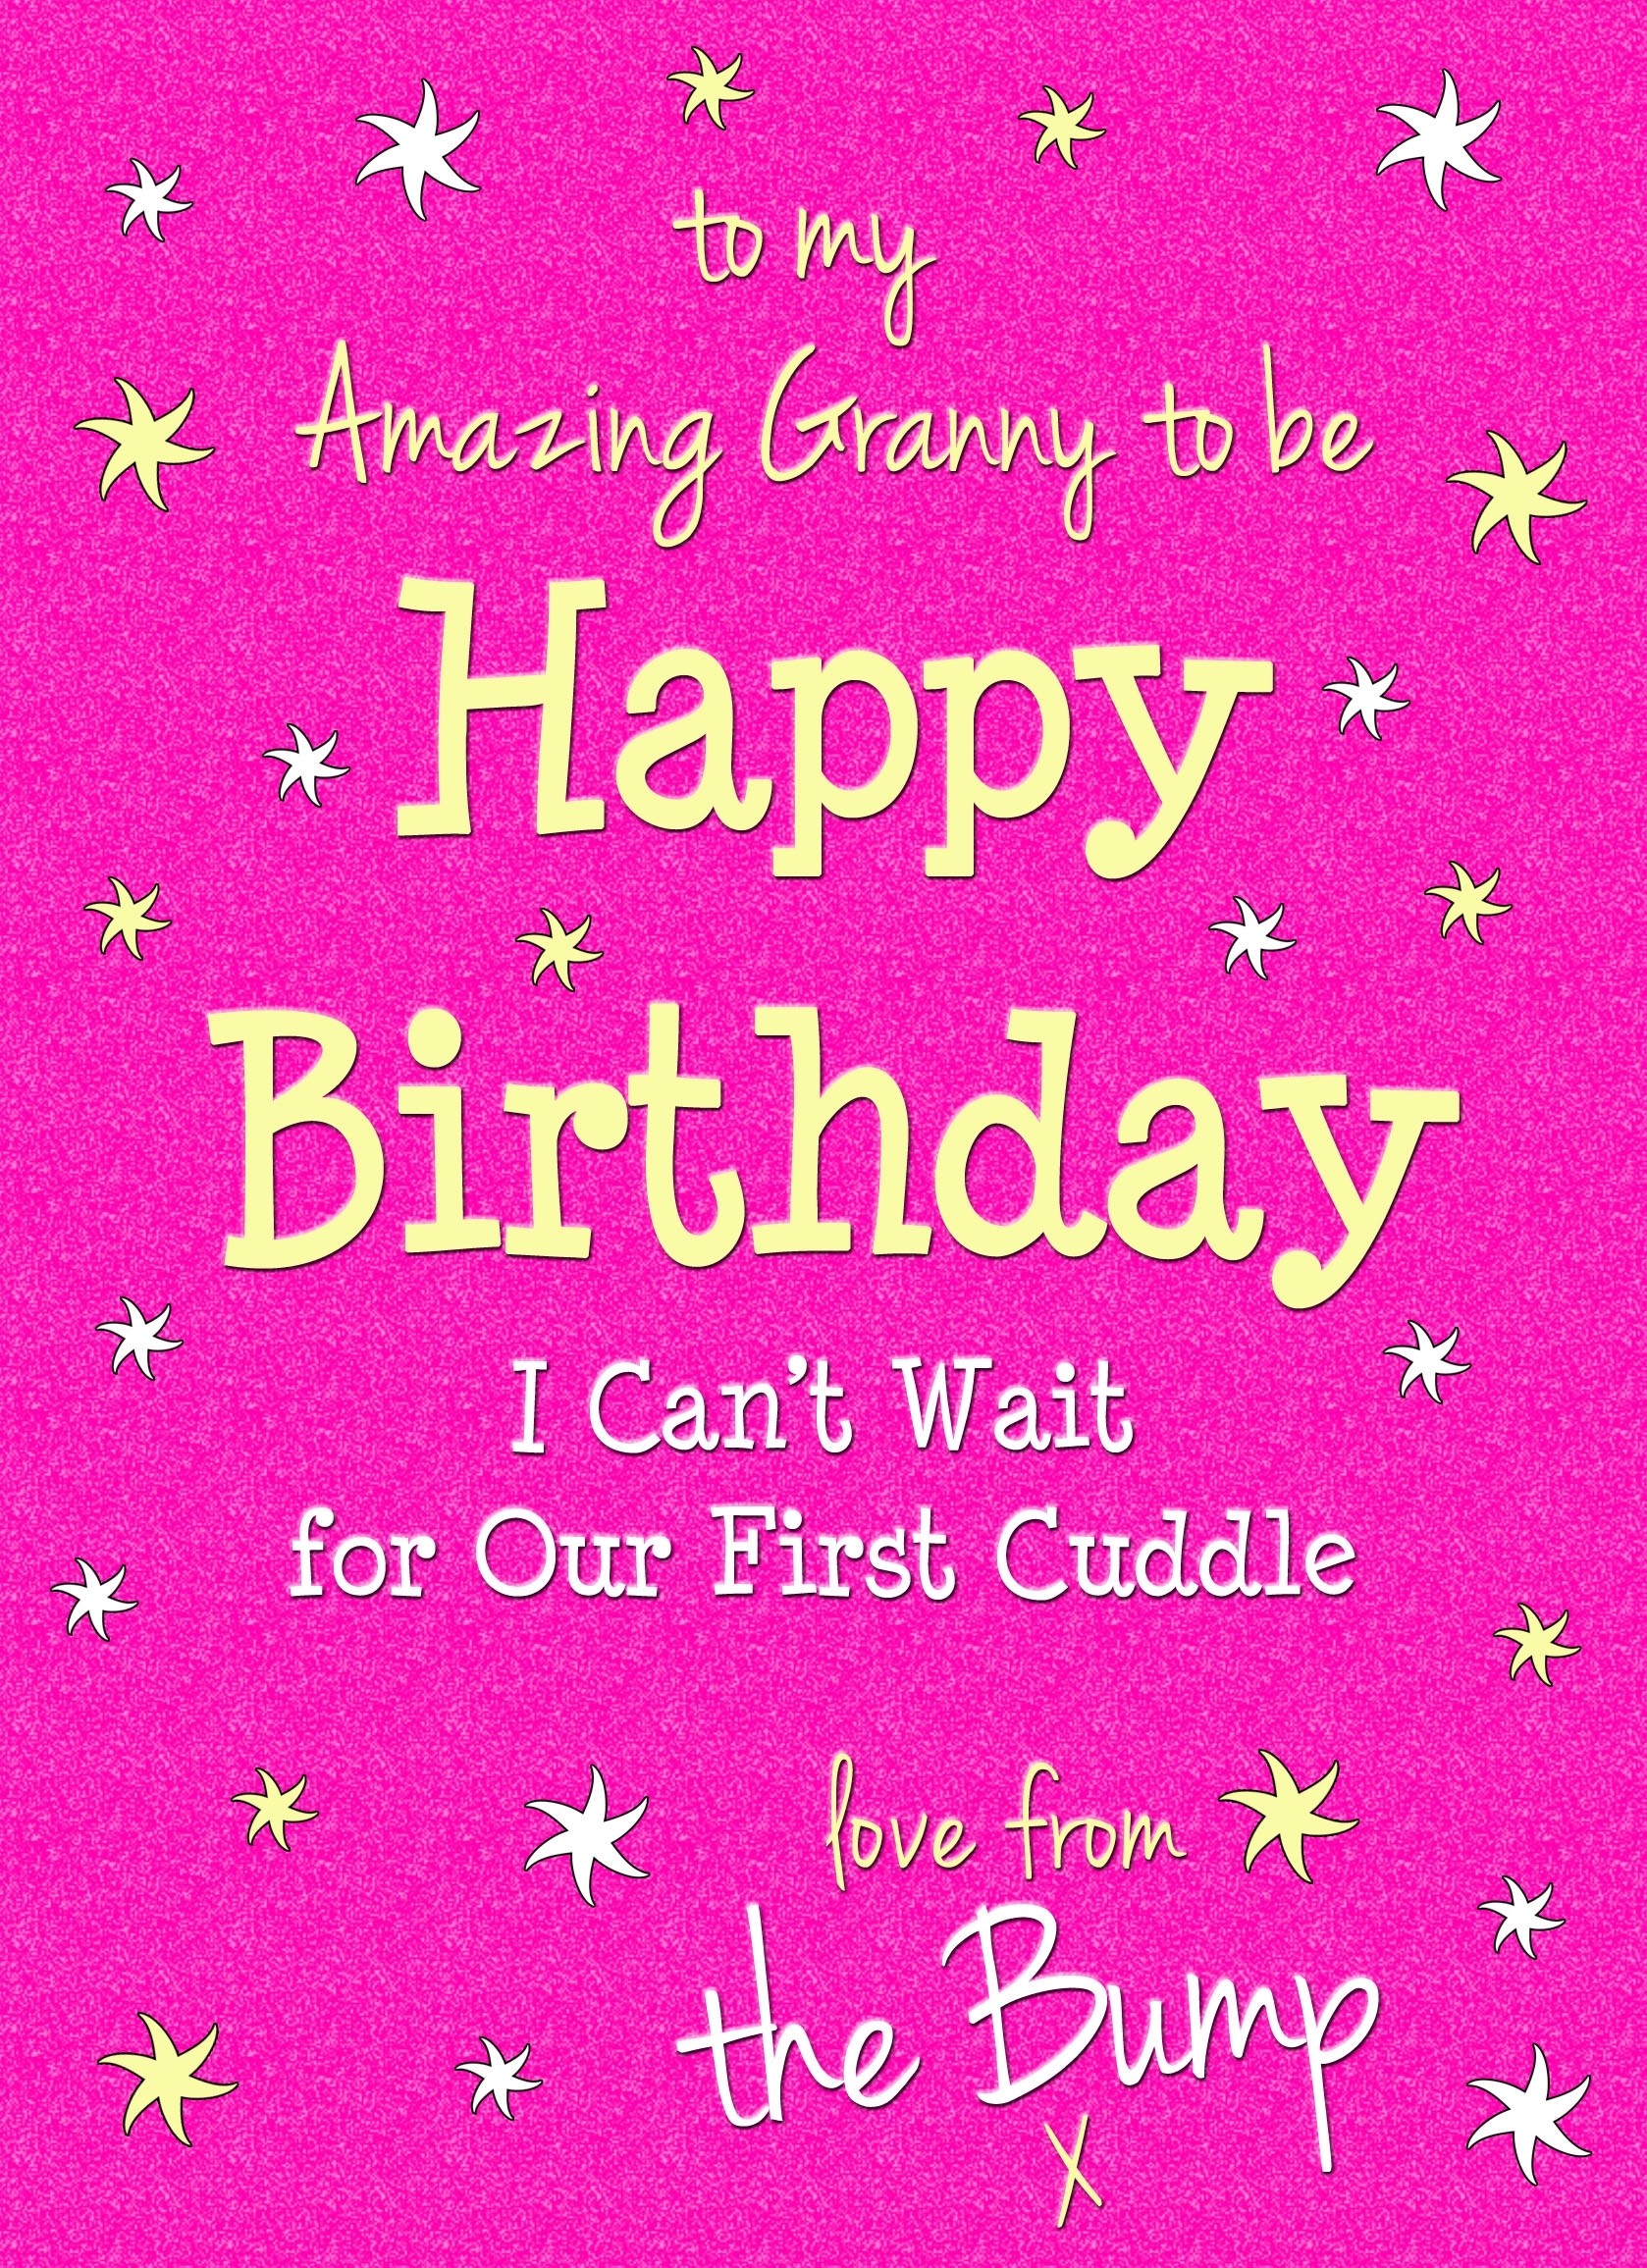 From The Bump Pregnancy Birthday Card (Granny, Cerise)